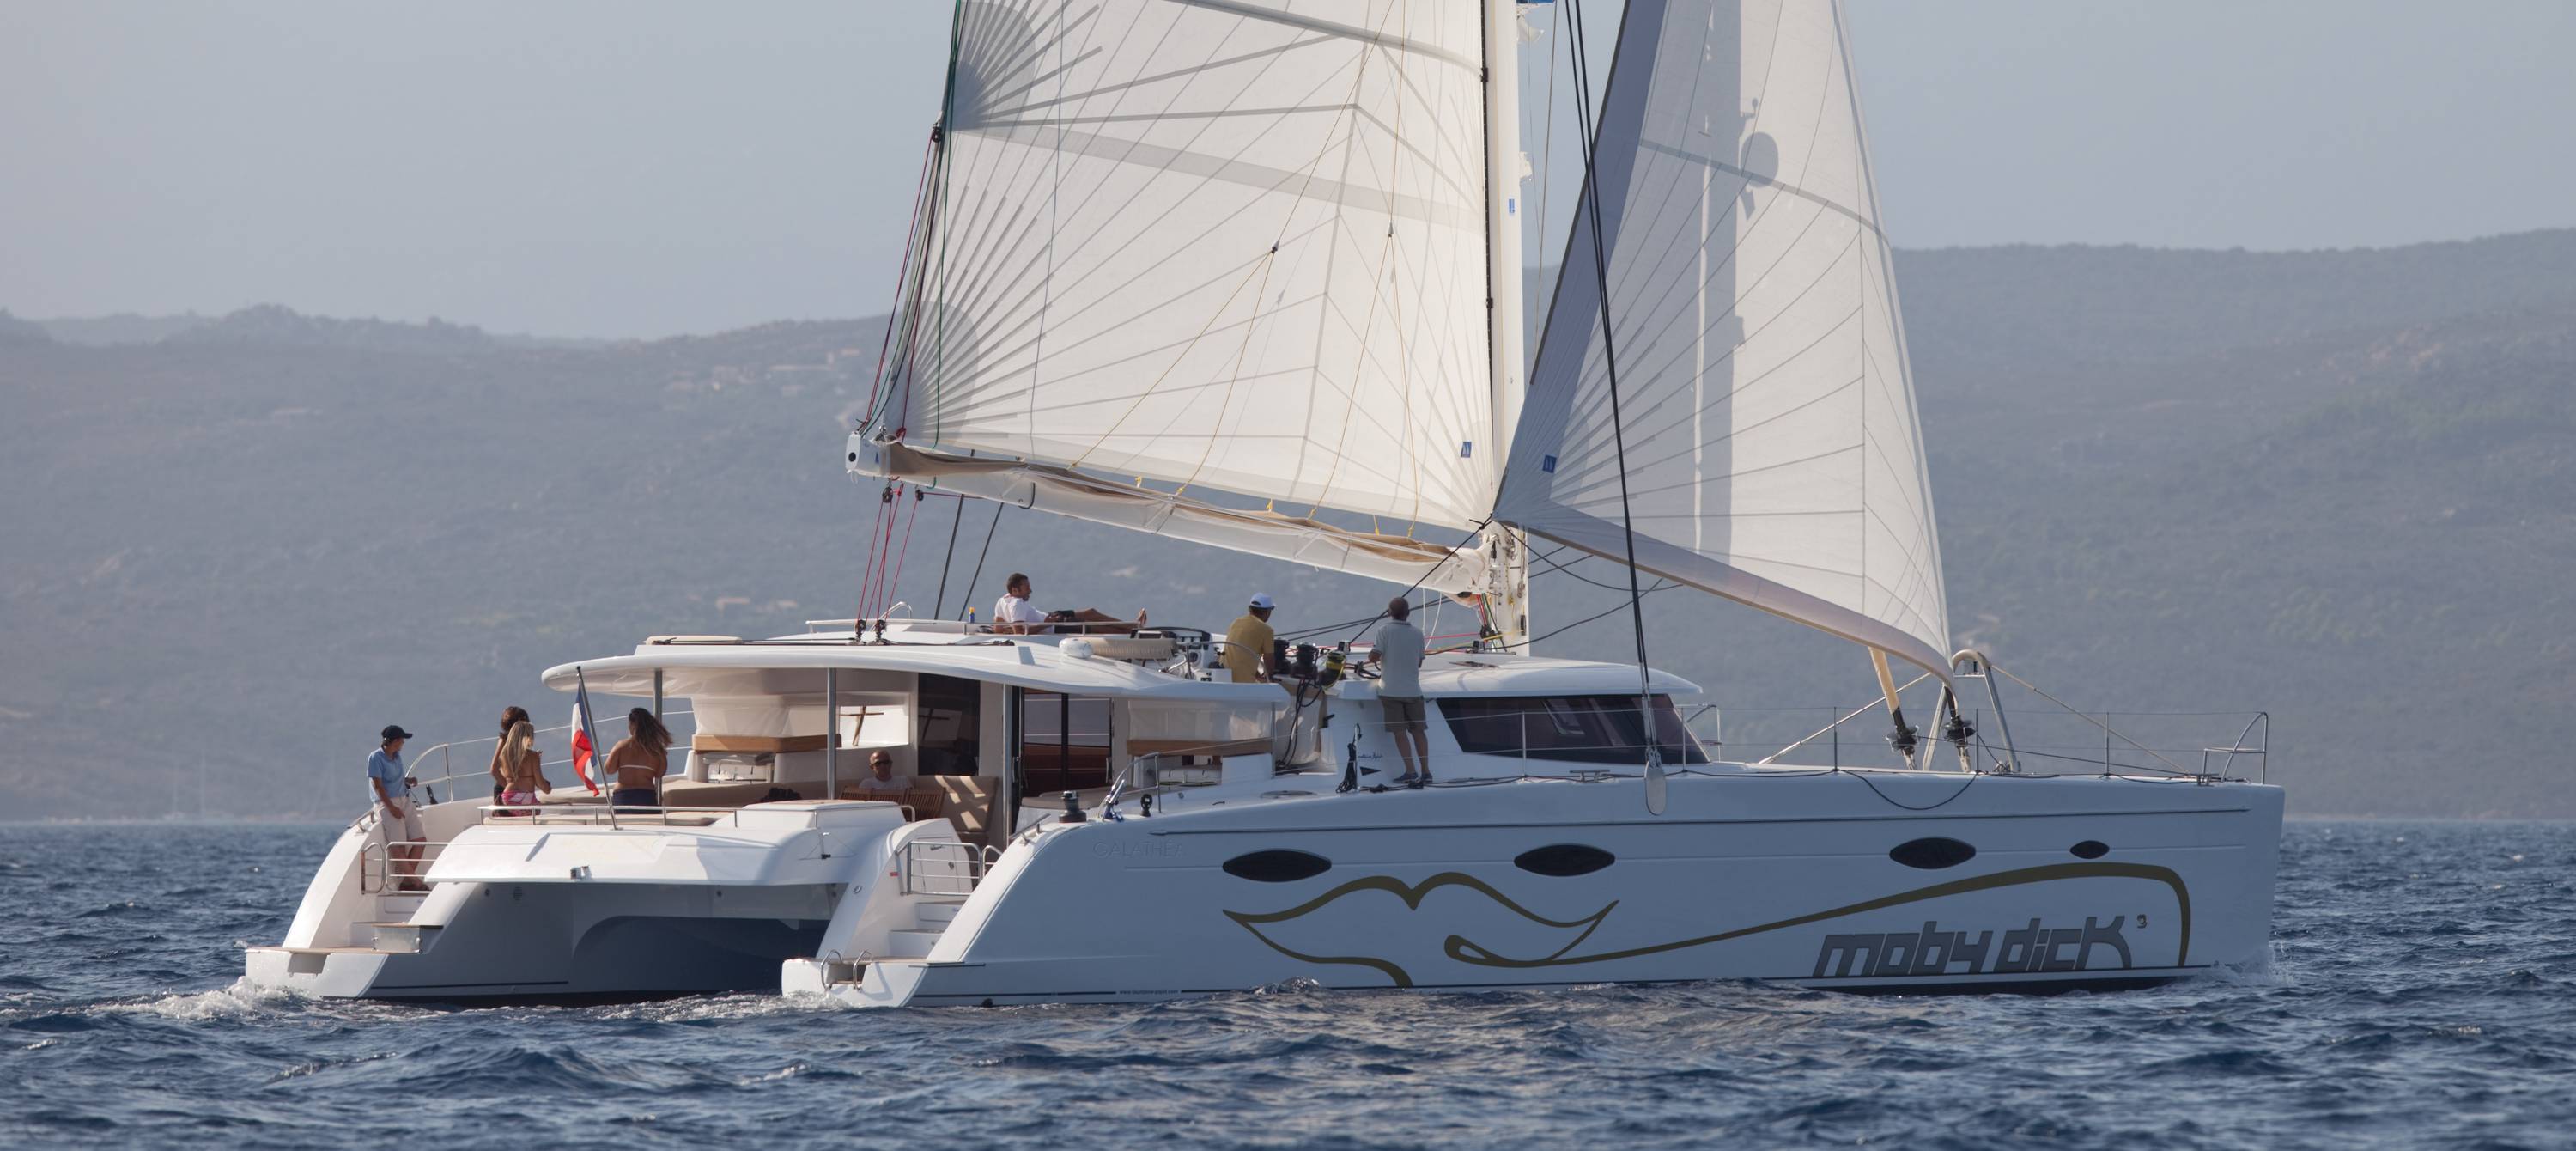 New catamaran for sale: Galathea 65